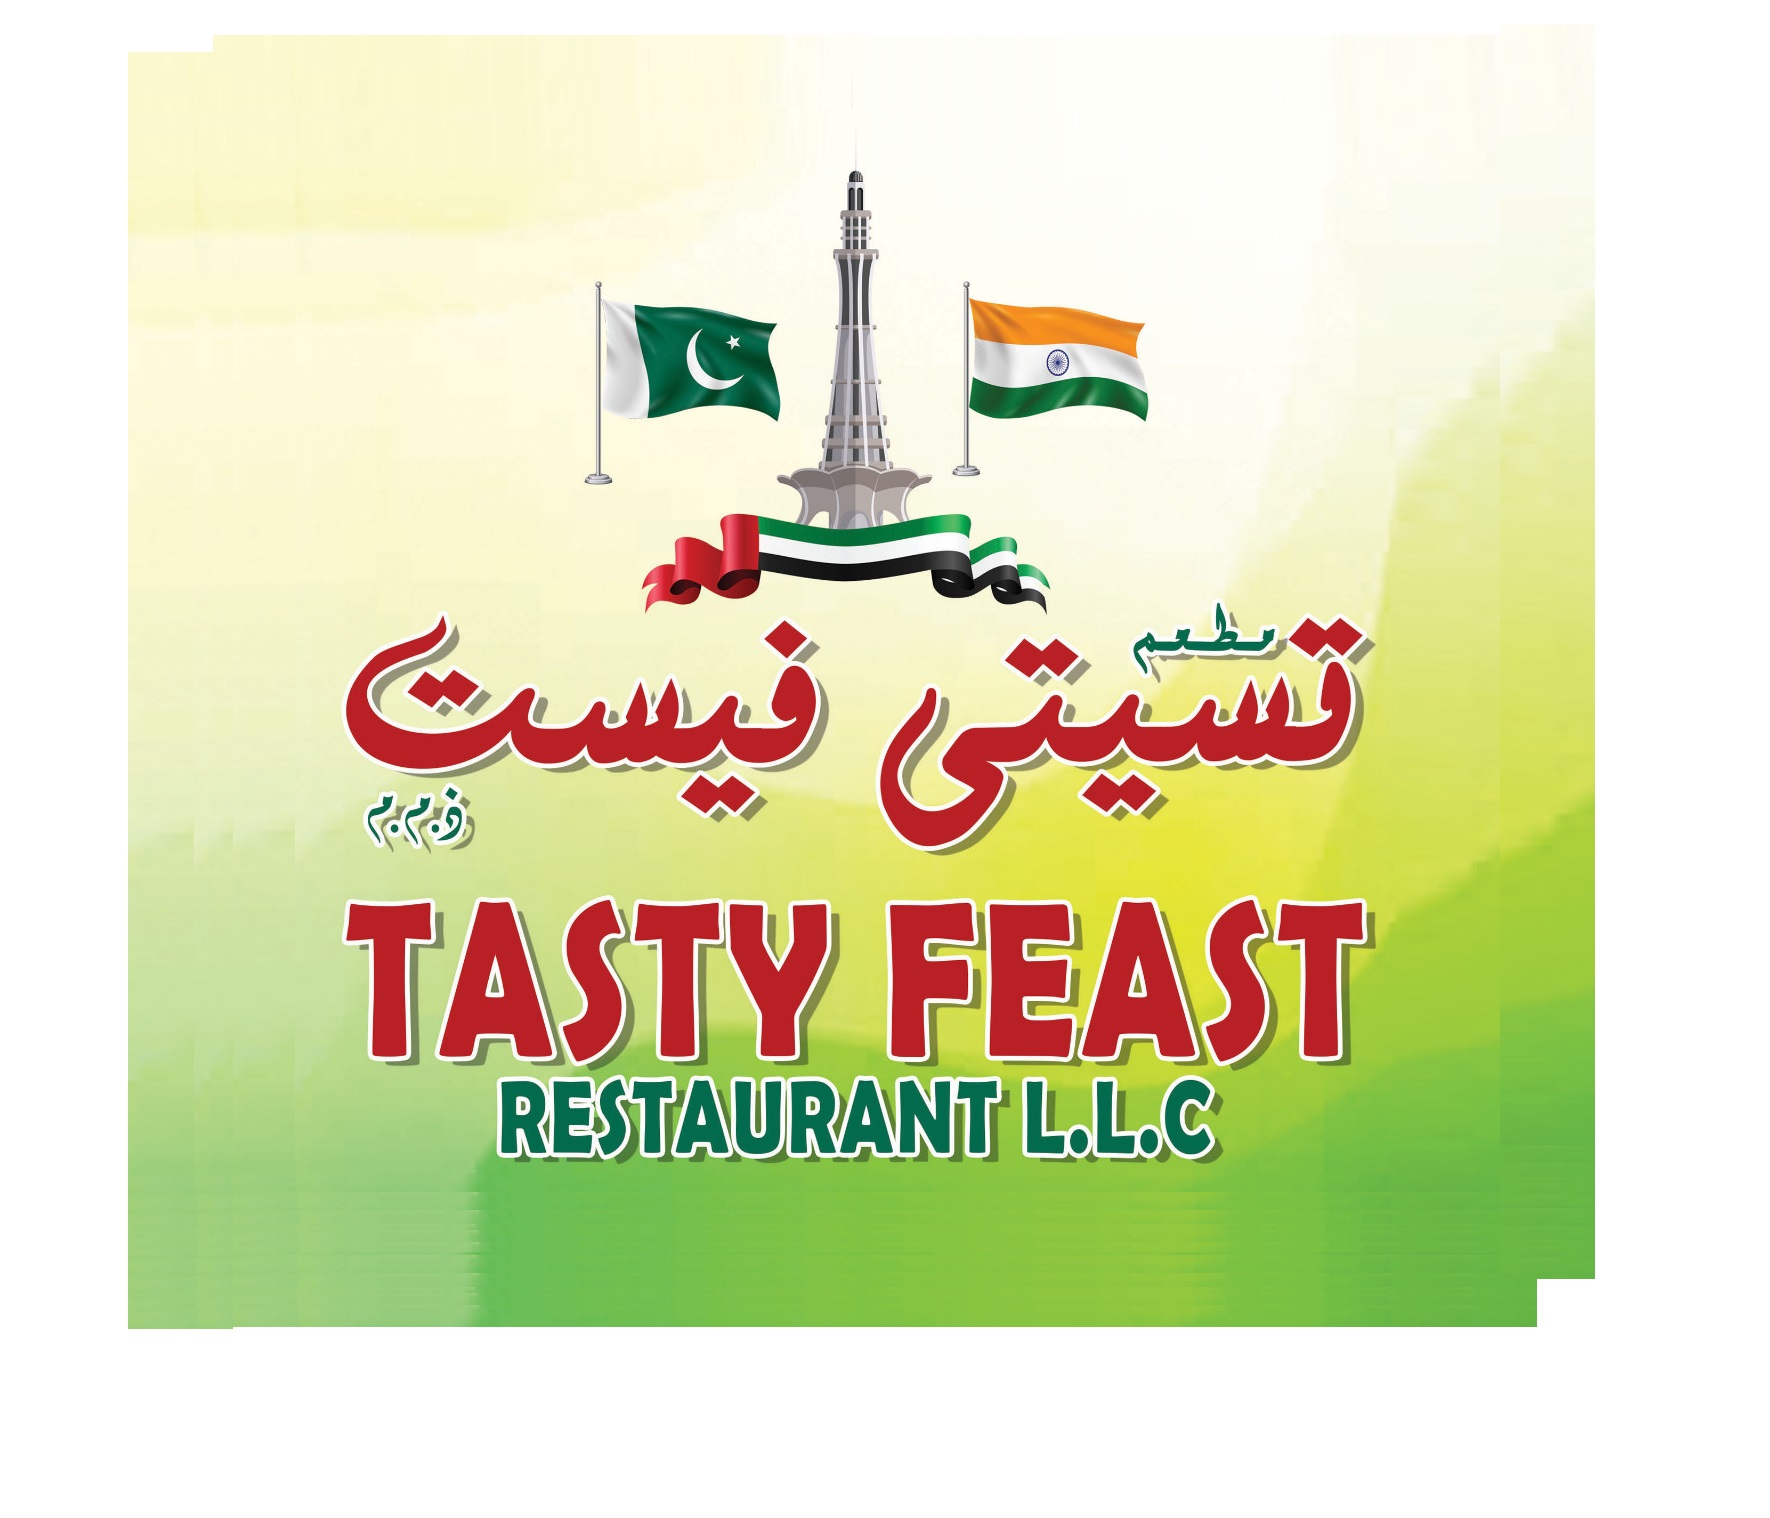 Tasty Feast Restaurant